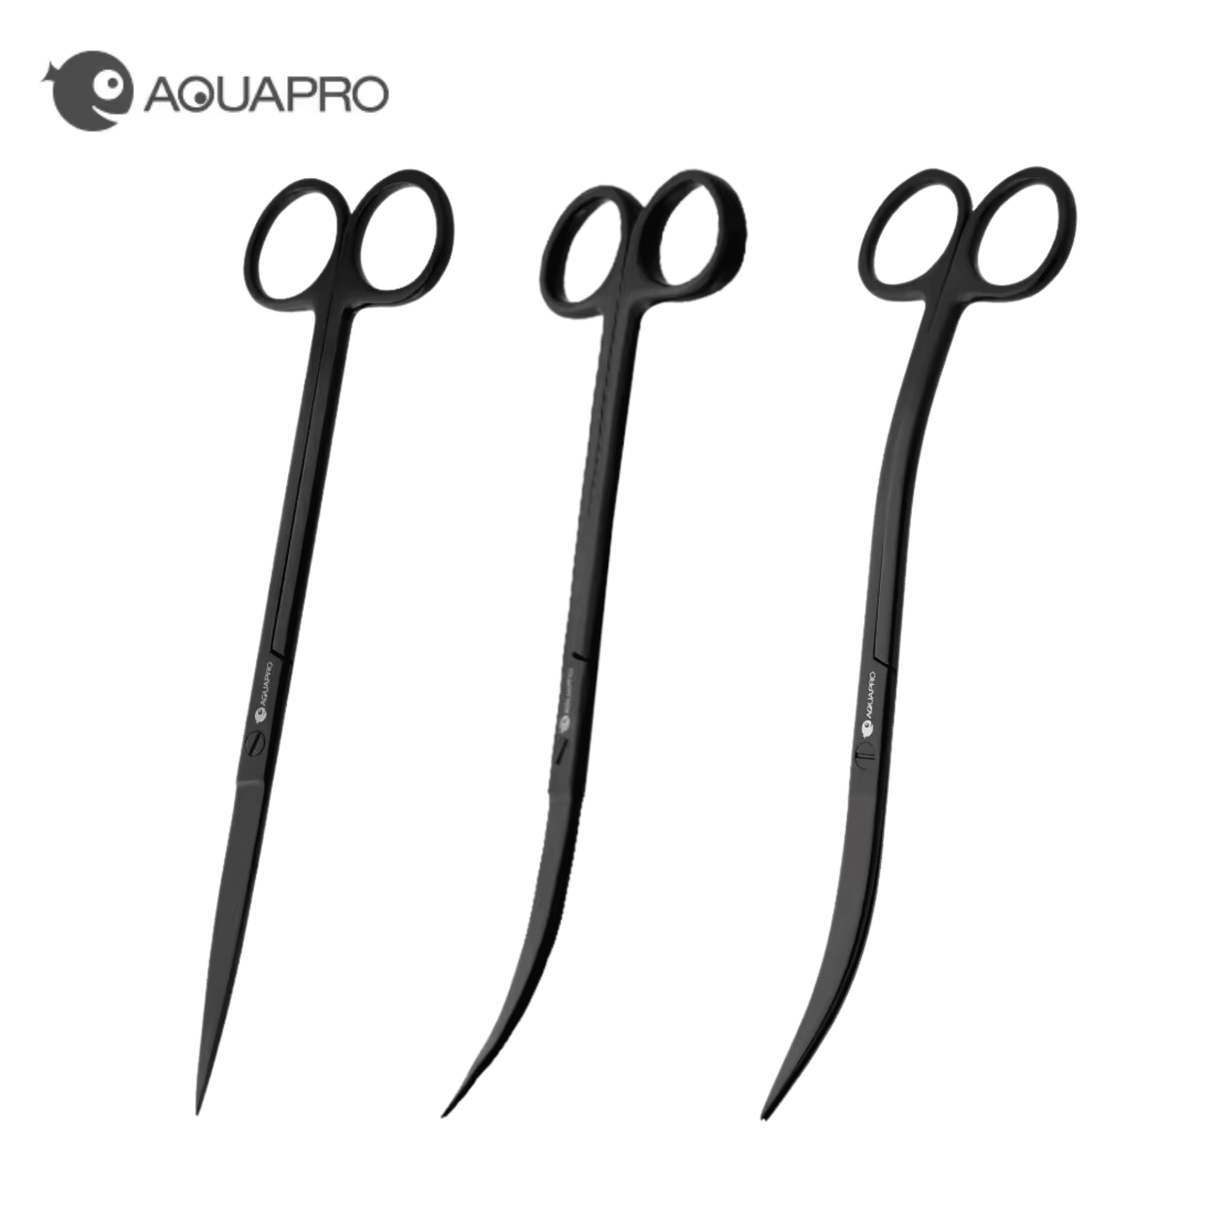 Aquapro Pro Scissors - Black